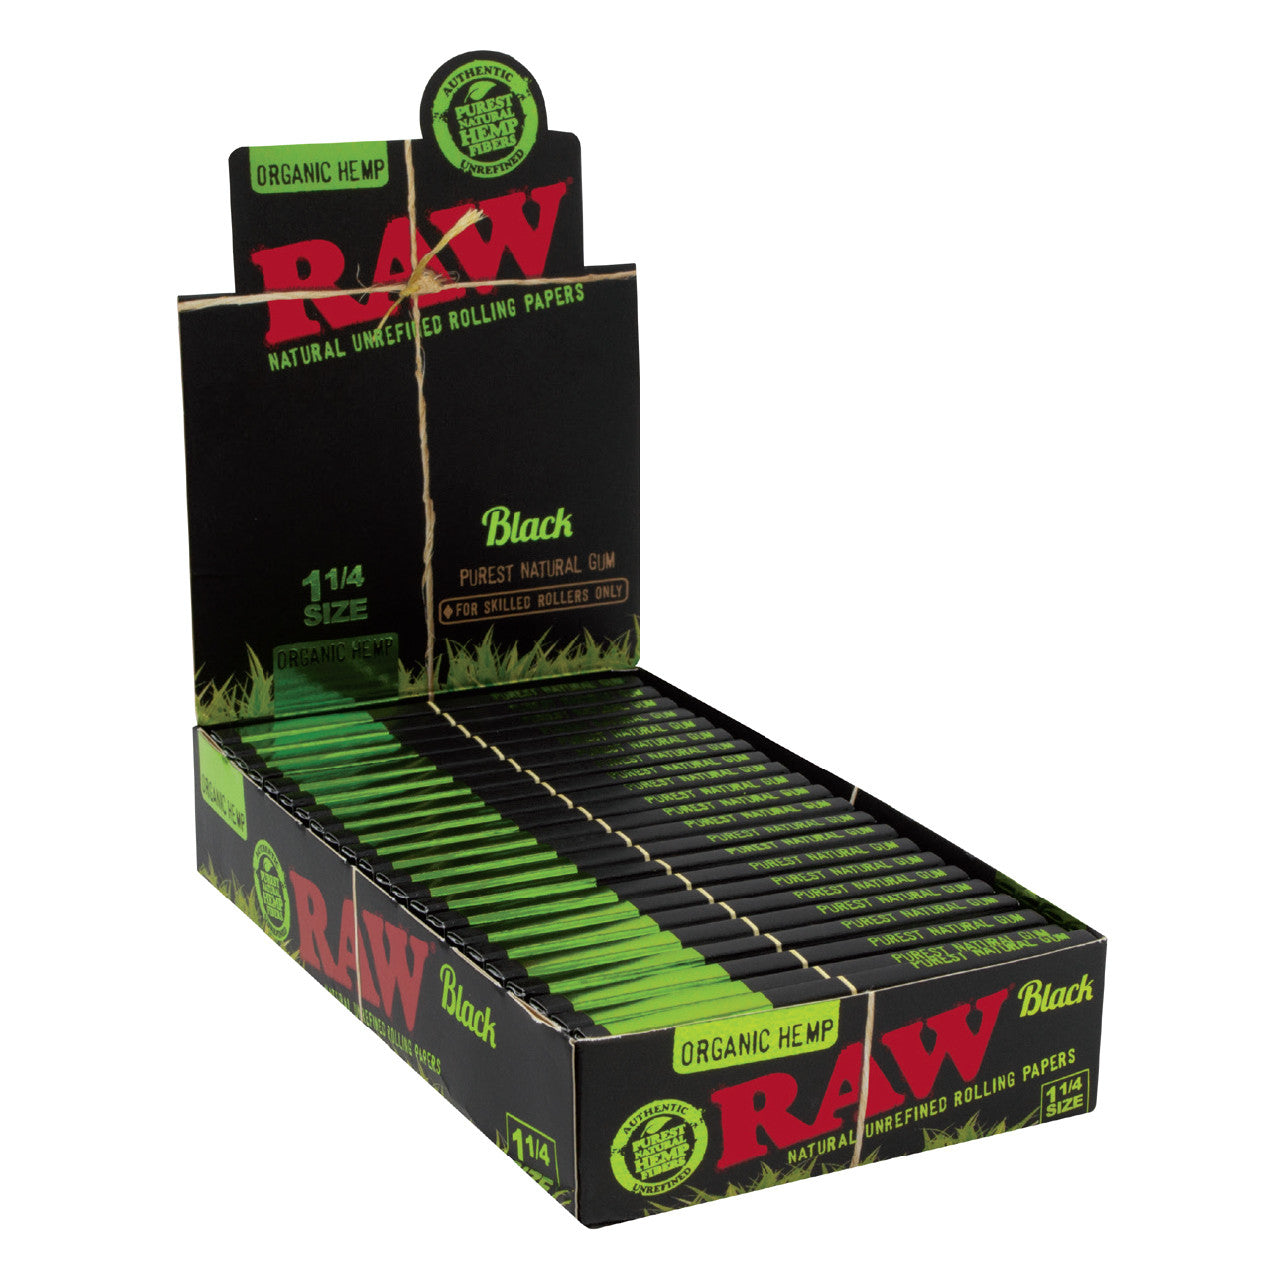 RAW Organic Hemp Black Rolling Papers 1¼ (50ct)